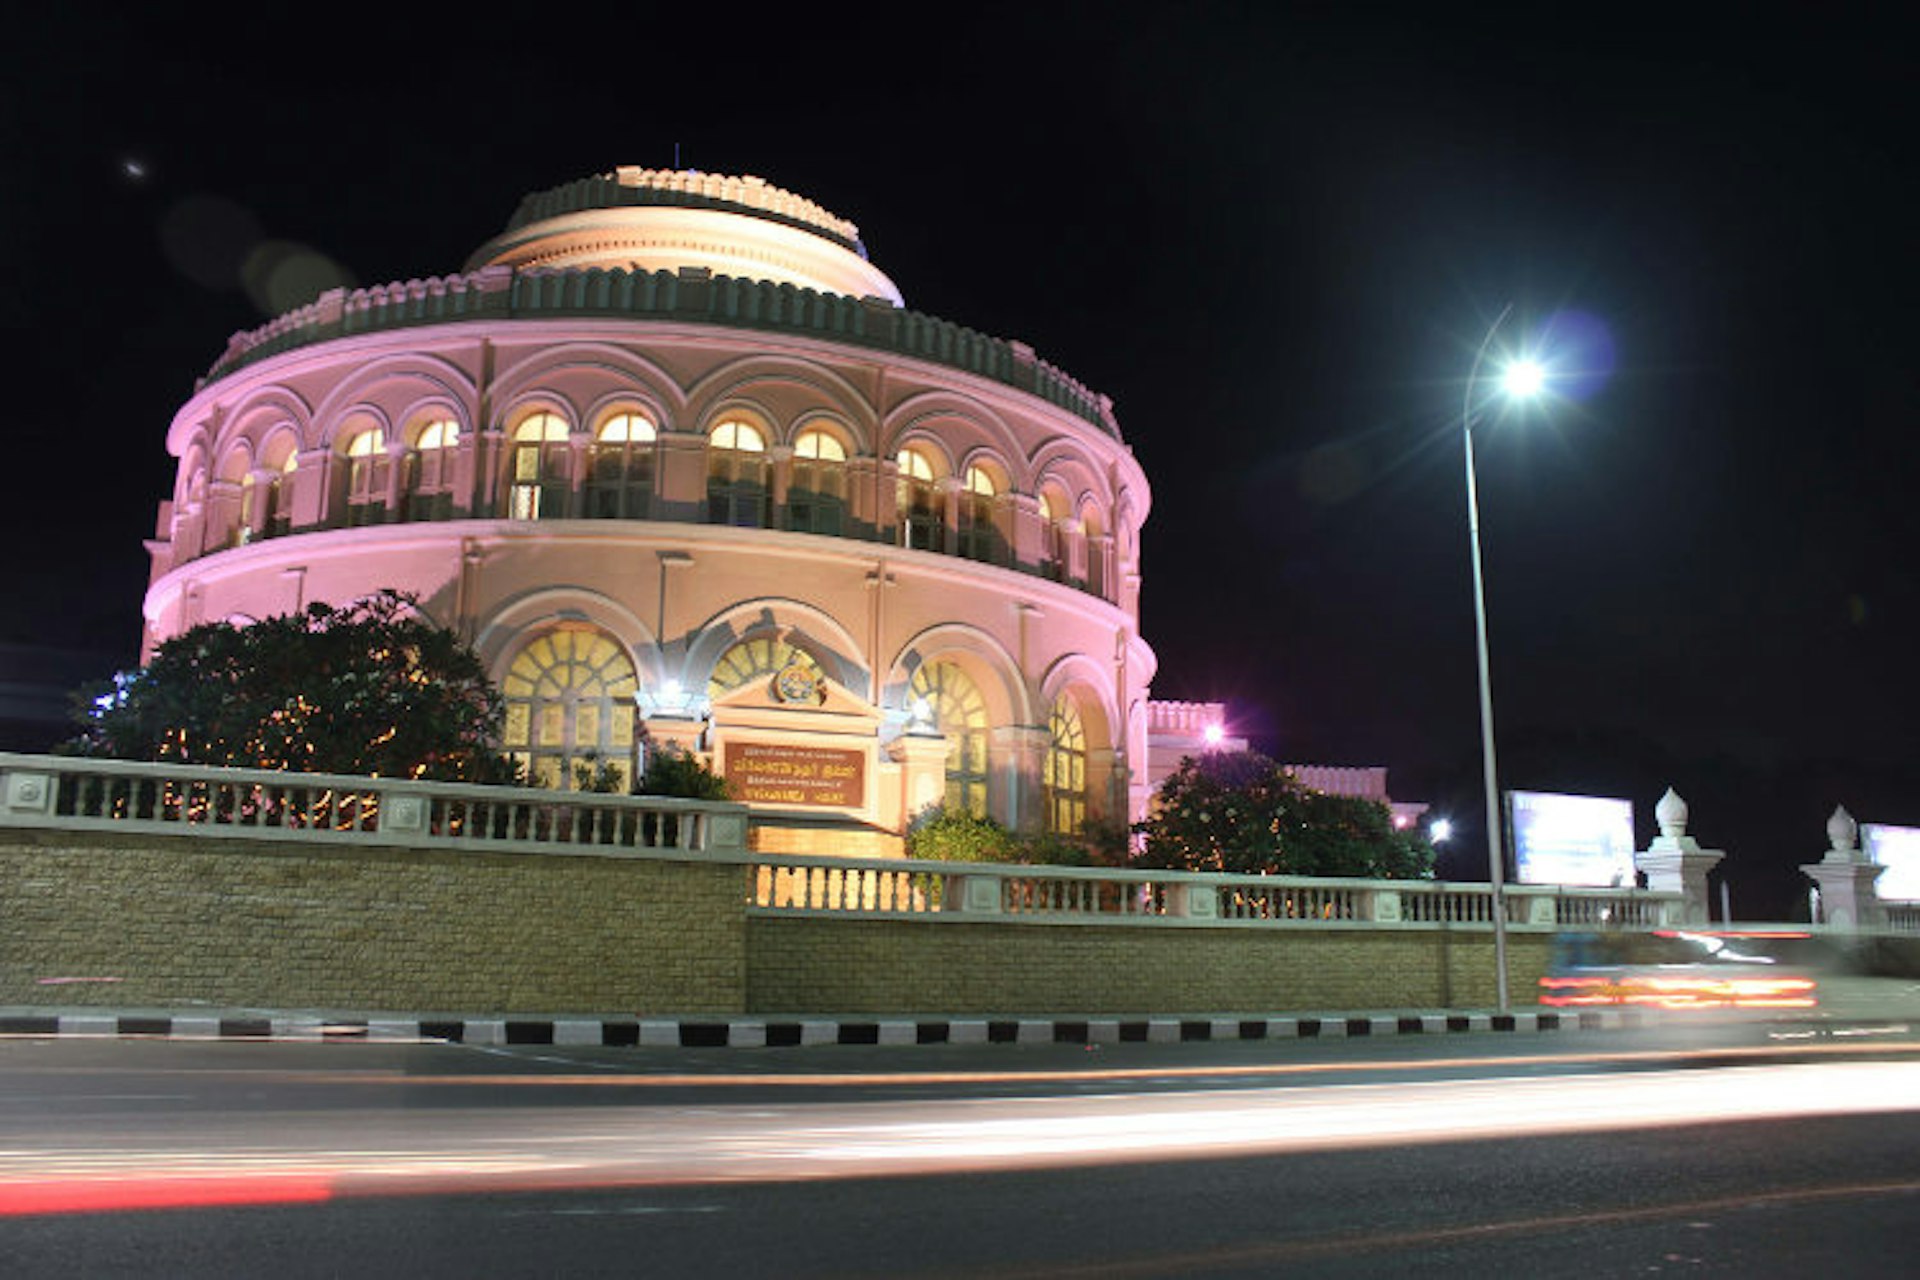 The Ice House at Vivekananda House. Image by Sridharan Chakravarthy / CC BY 2.0.